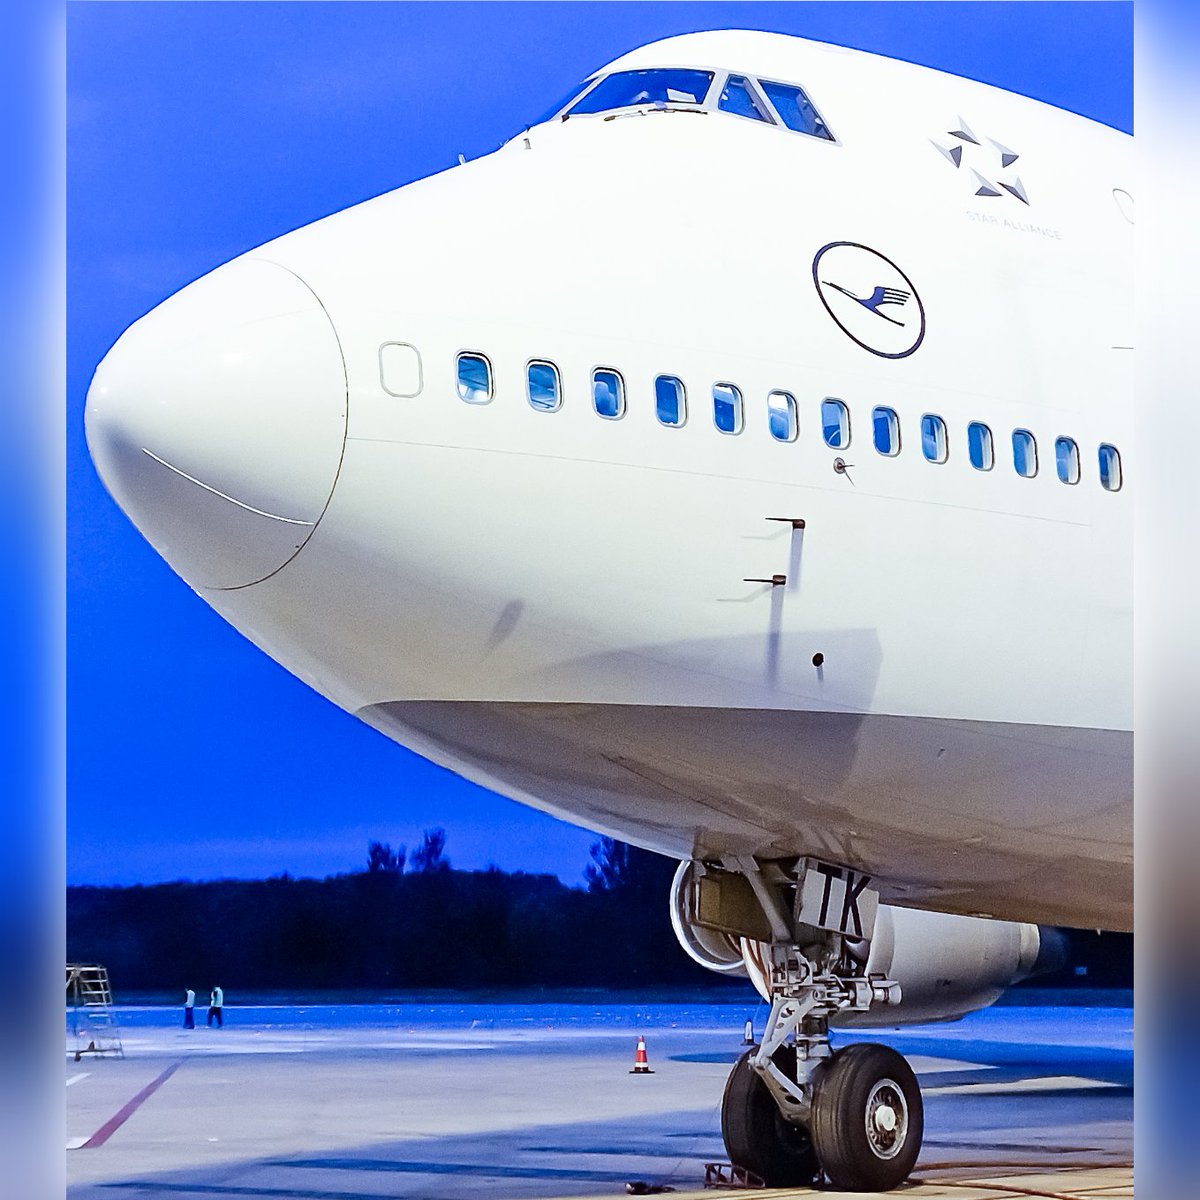 The wonderful Boeing 747-400.
Check out my Instagram stories (or story highlight) of my flight FRA-SHE/TAO. Interesting read 😁

#aviation #pilot #pilotview #airplane #aircraft #boeing747 #boeing #b744
@Boeing @BoeingAirplanes @lufthansaNews @lufthansa @Lufthansa_DE